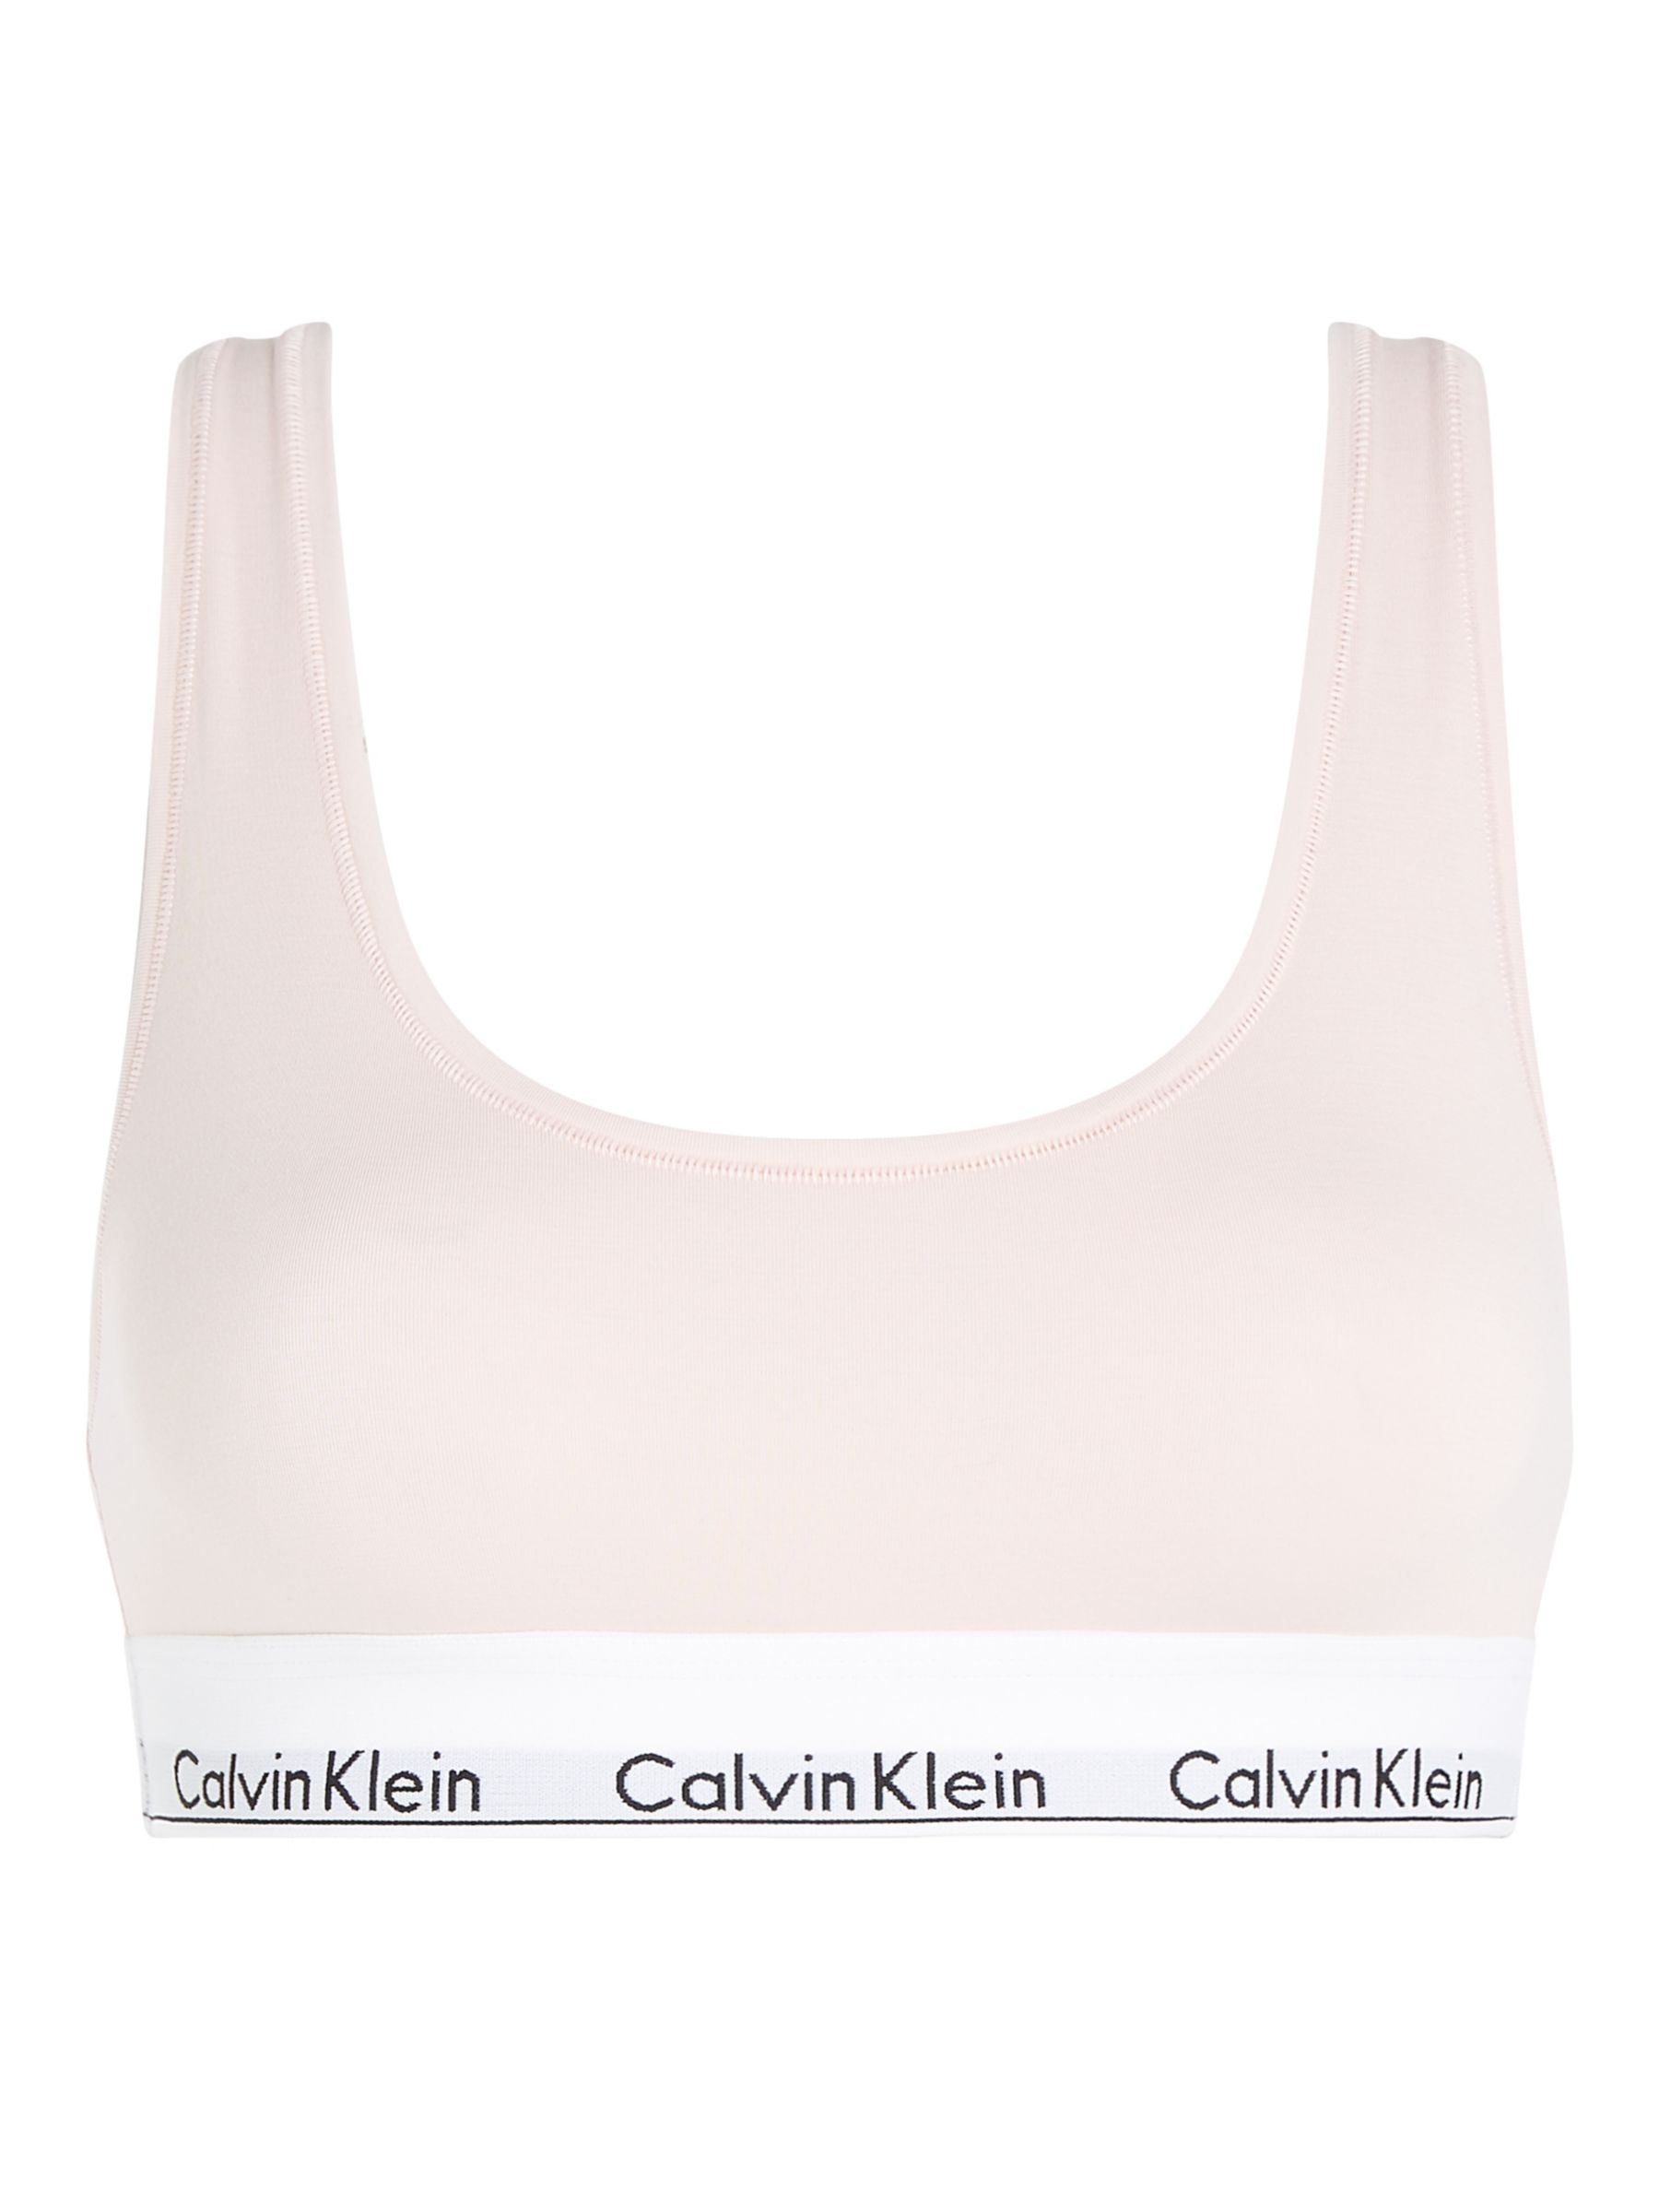 Calvin Klein Women's Modern Cotton Lightly Lined, Nymph's Thigh